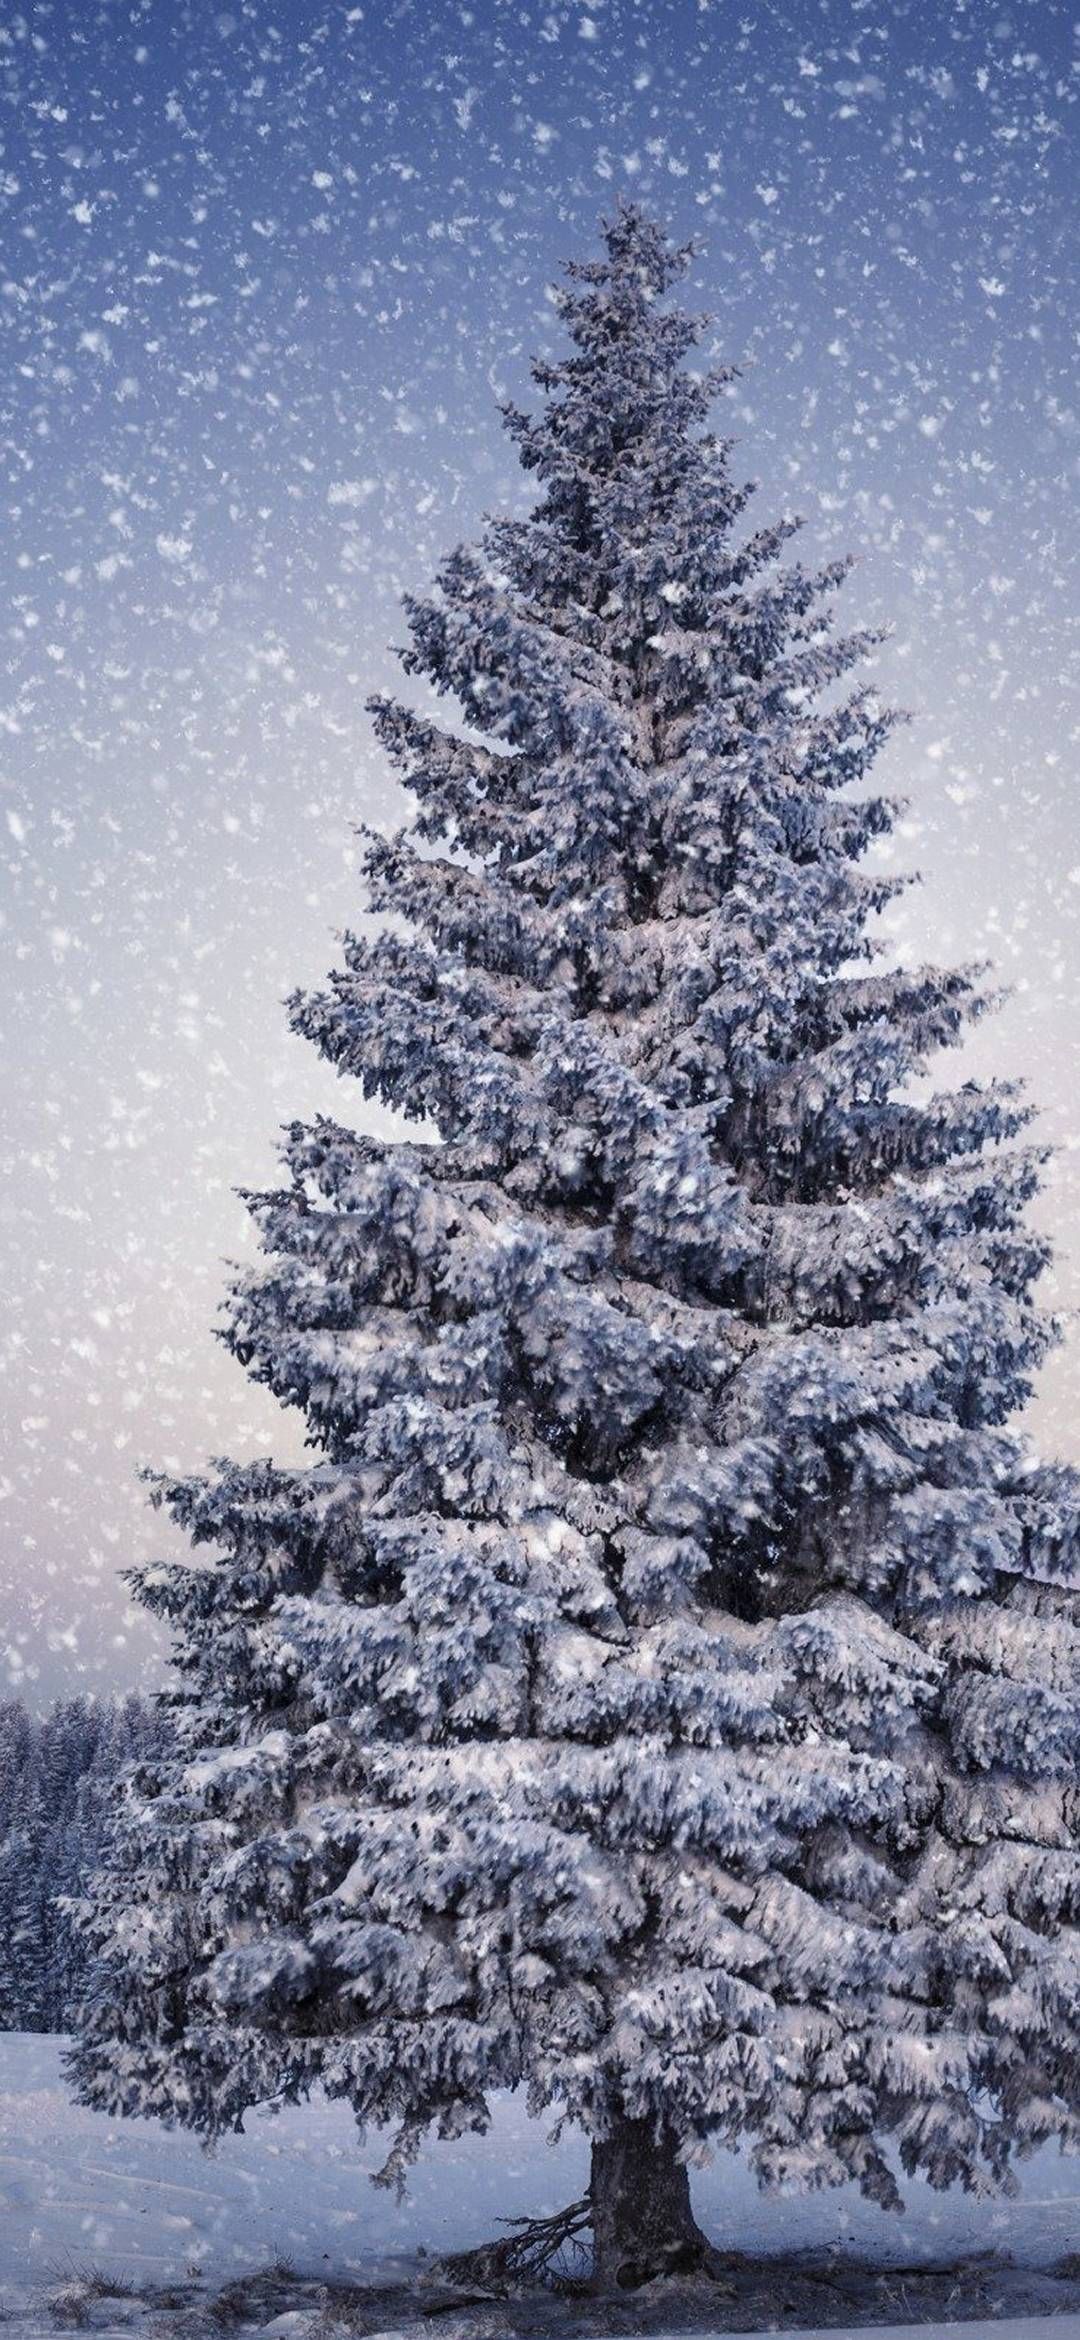 King Tree In Winter - [1080x2340]. Samsung wallpaper, iPhone wallpaper winter, Free android wallpaper